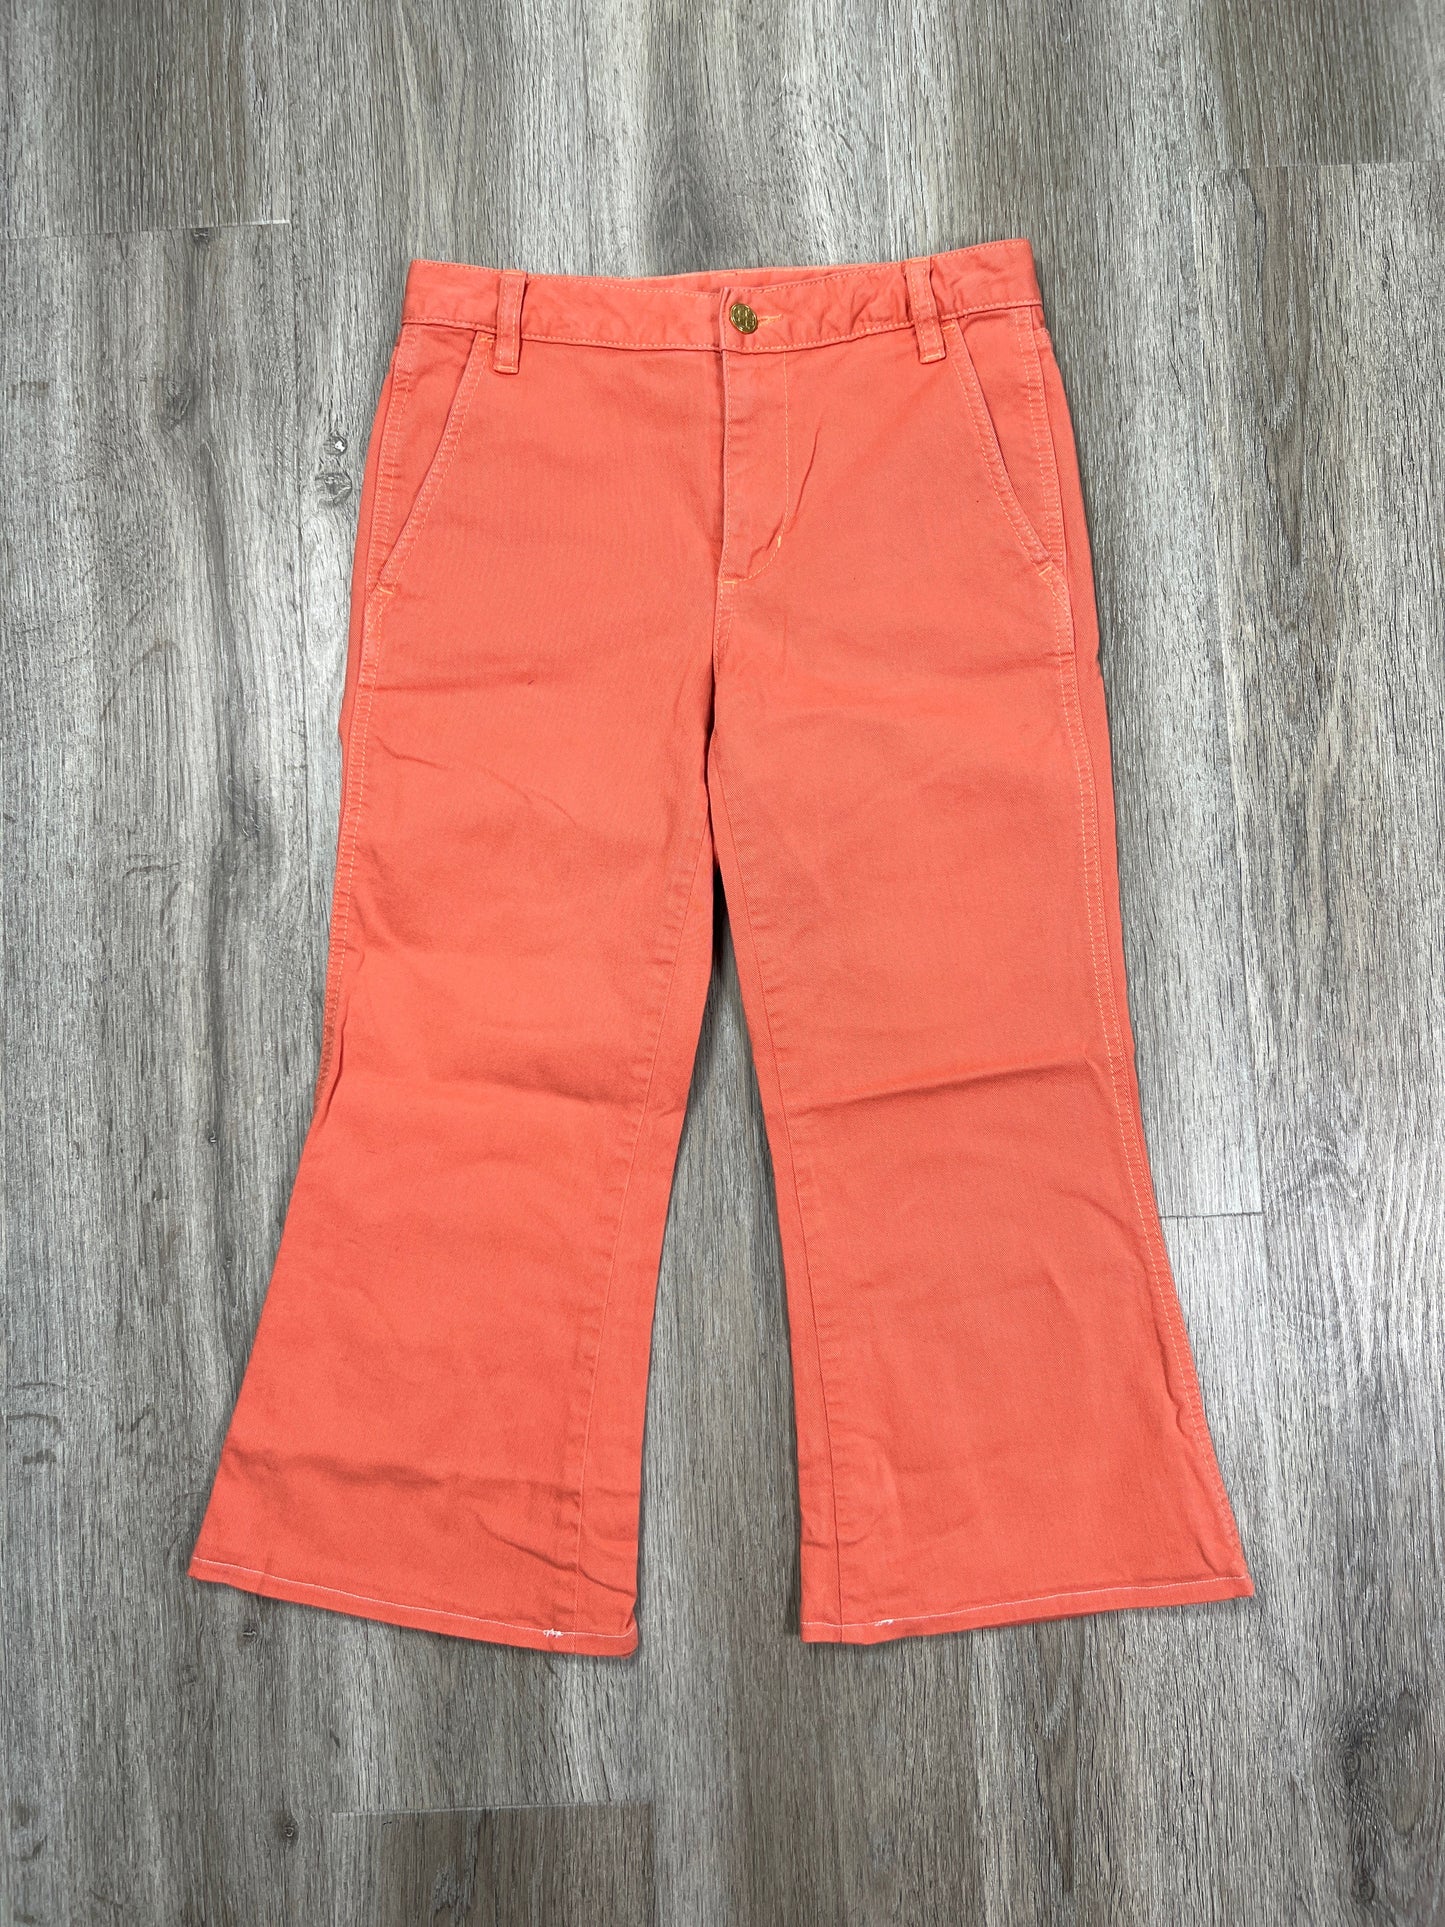 Orange Pants Cropped Tory Burch, Size S